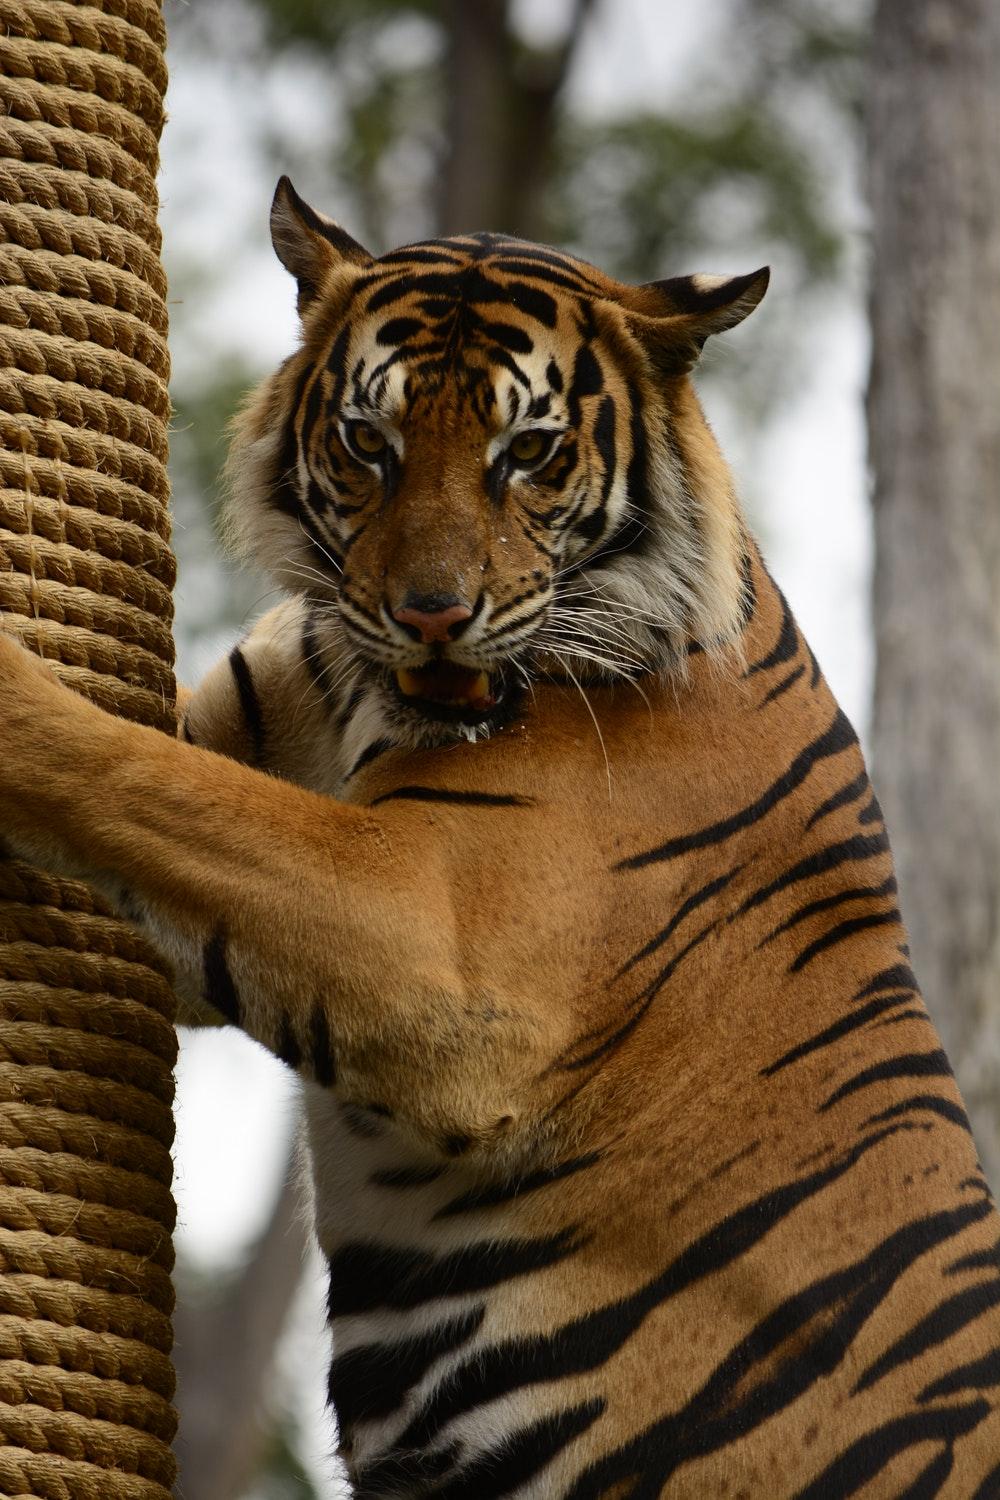 Tiger Portrait Picture. Download Free Image